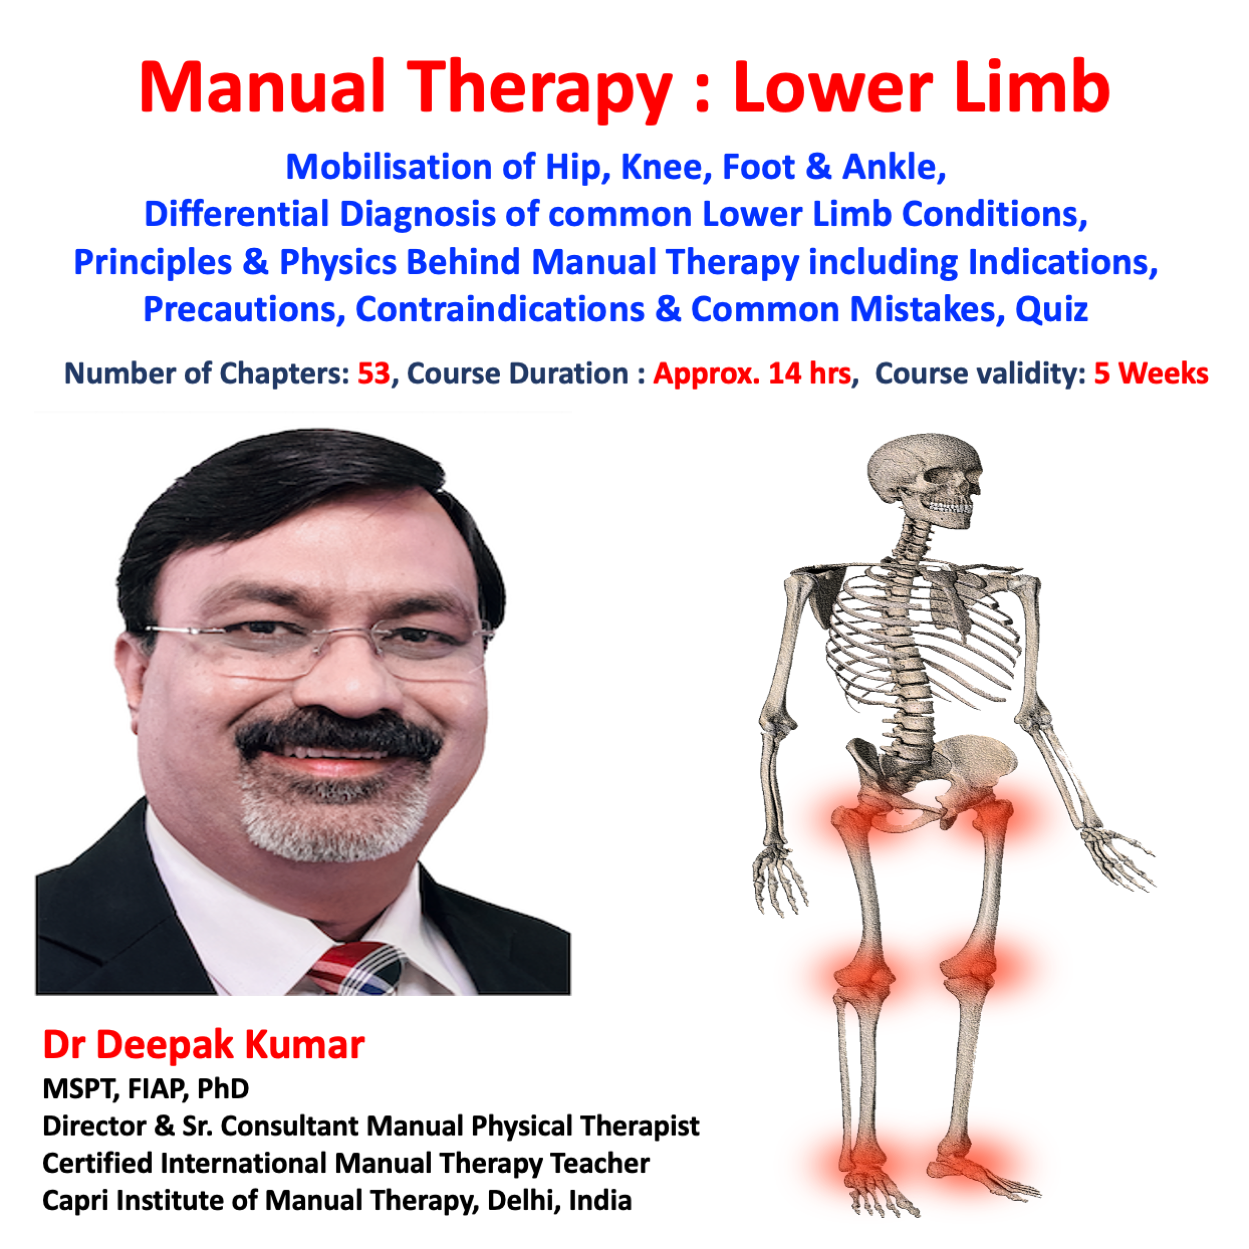 Manual Therapy : Lower Limb